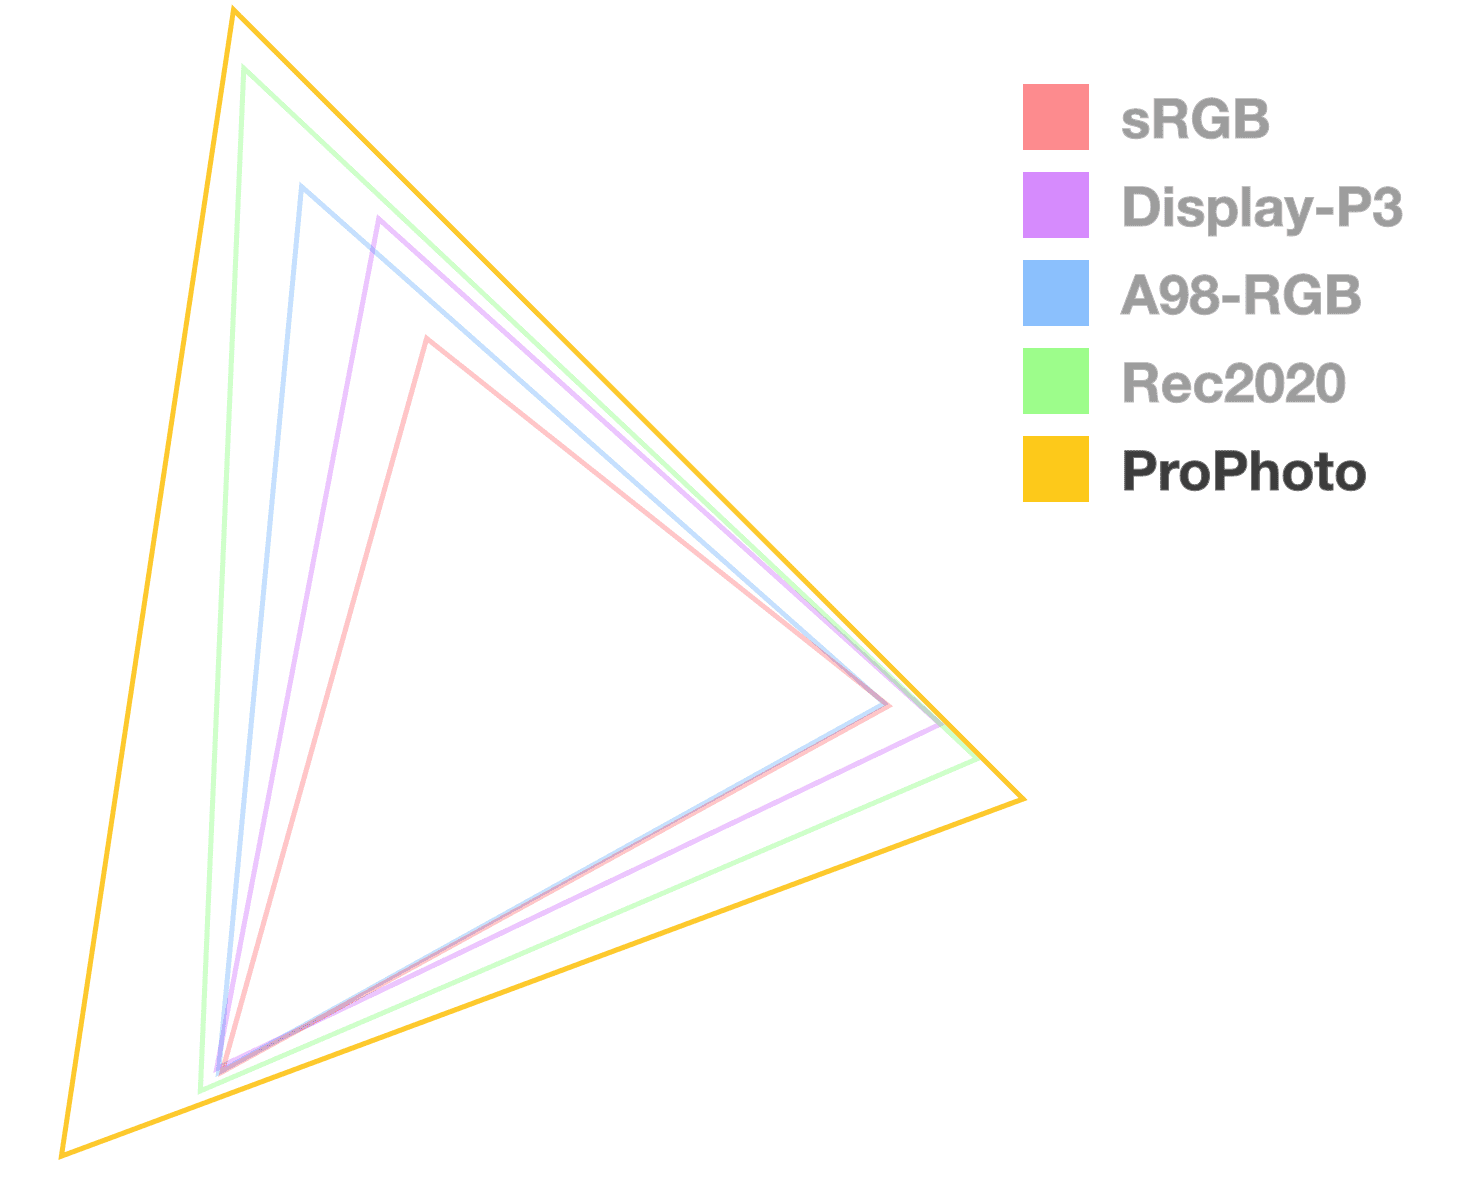 Segitiga ProPhoto adalah satu-satunya gambar yang sepenuhnya buram, untuk membantu memvisualisasikan ukuran gamut. Sepertinya yang terbesar.